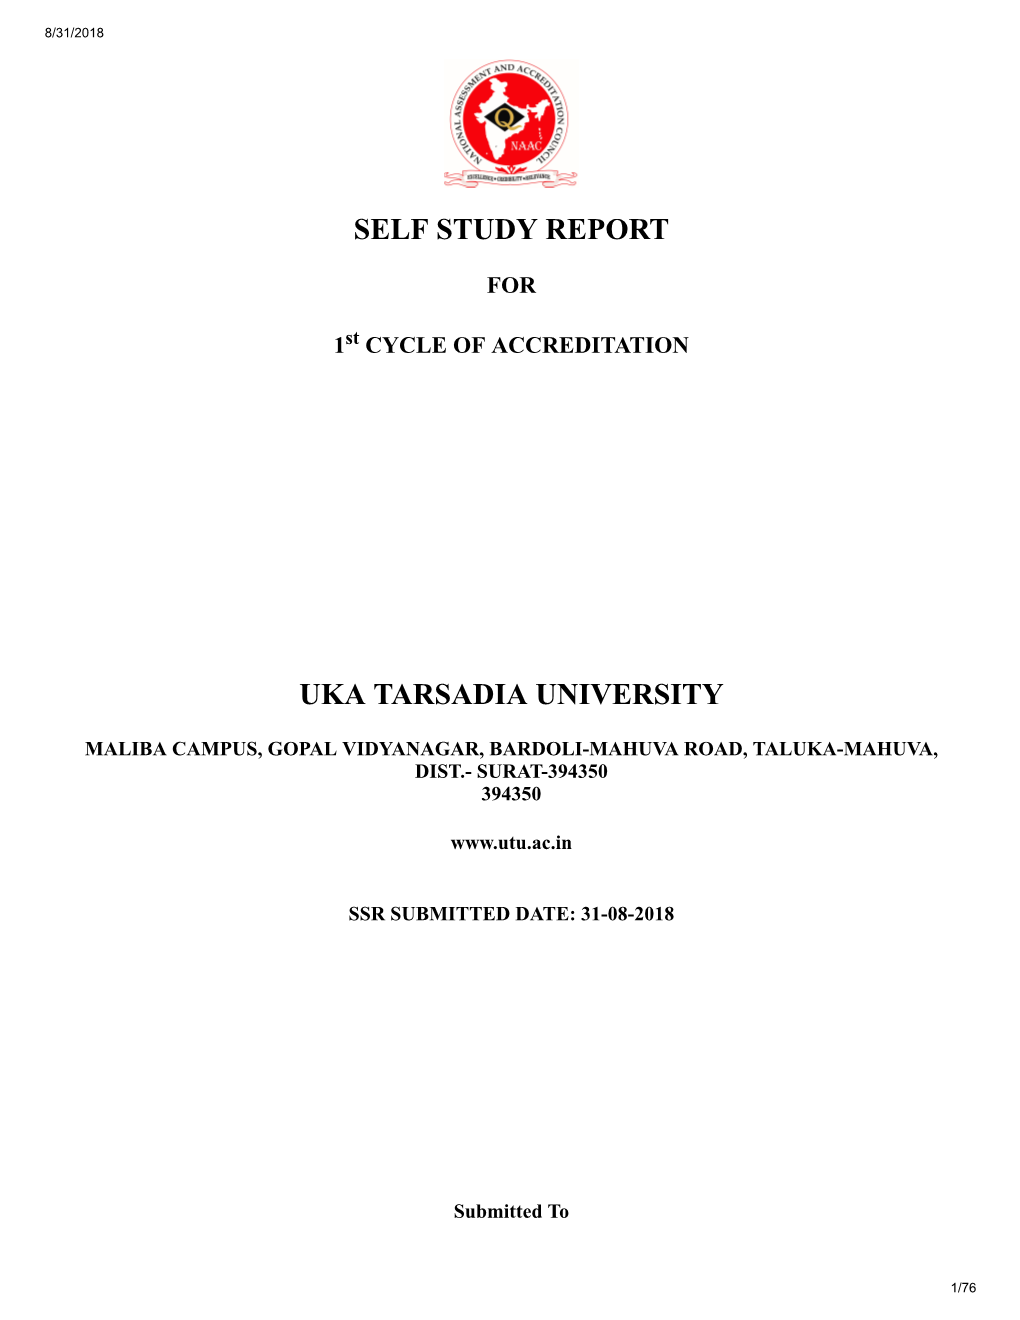 Self Study Report Uka Tarsadia University